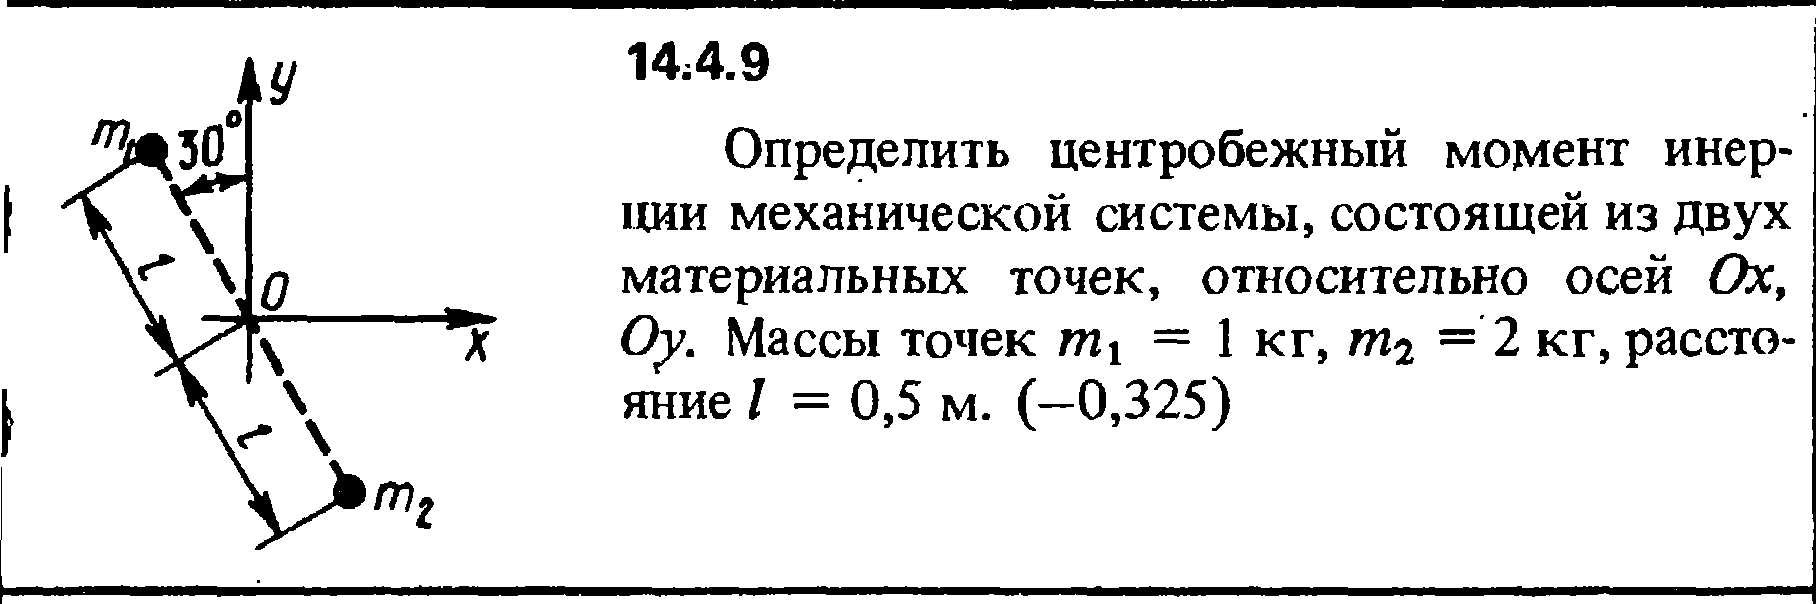 Решение задачи 14.4.9 из сборника Кепе О.Е. 1989 года